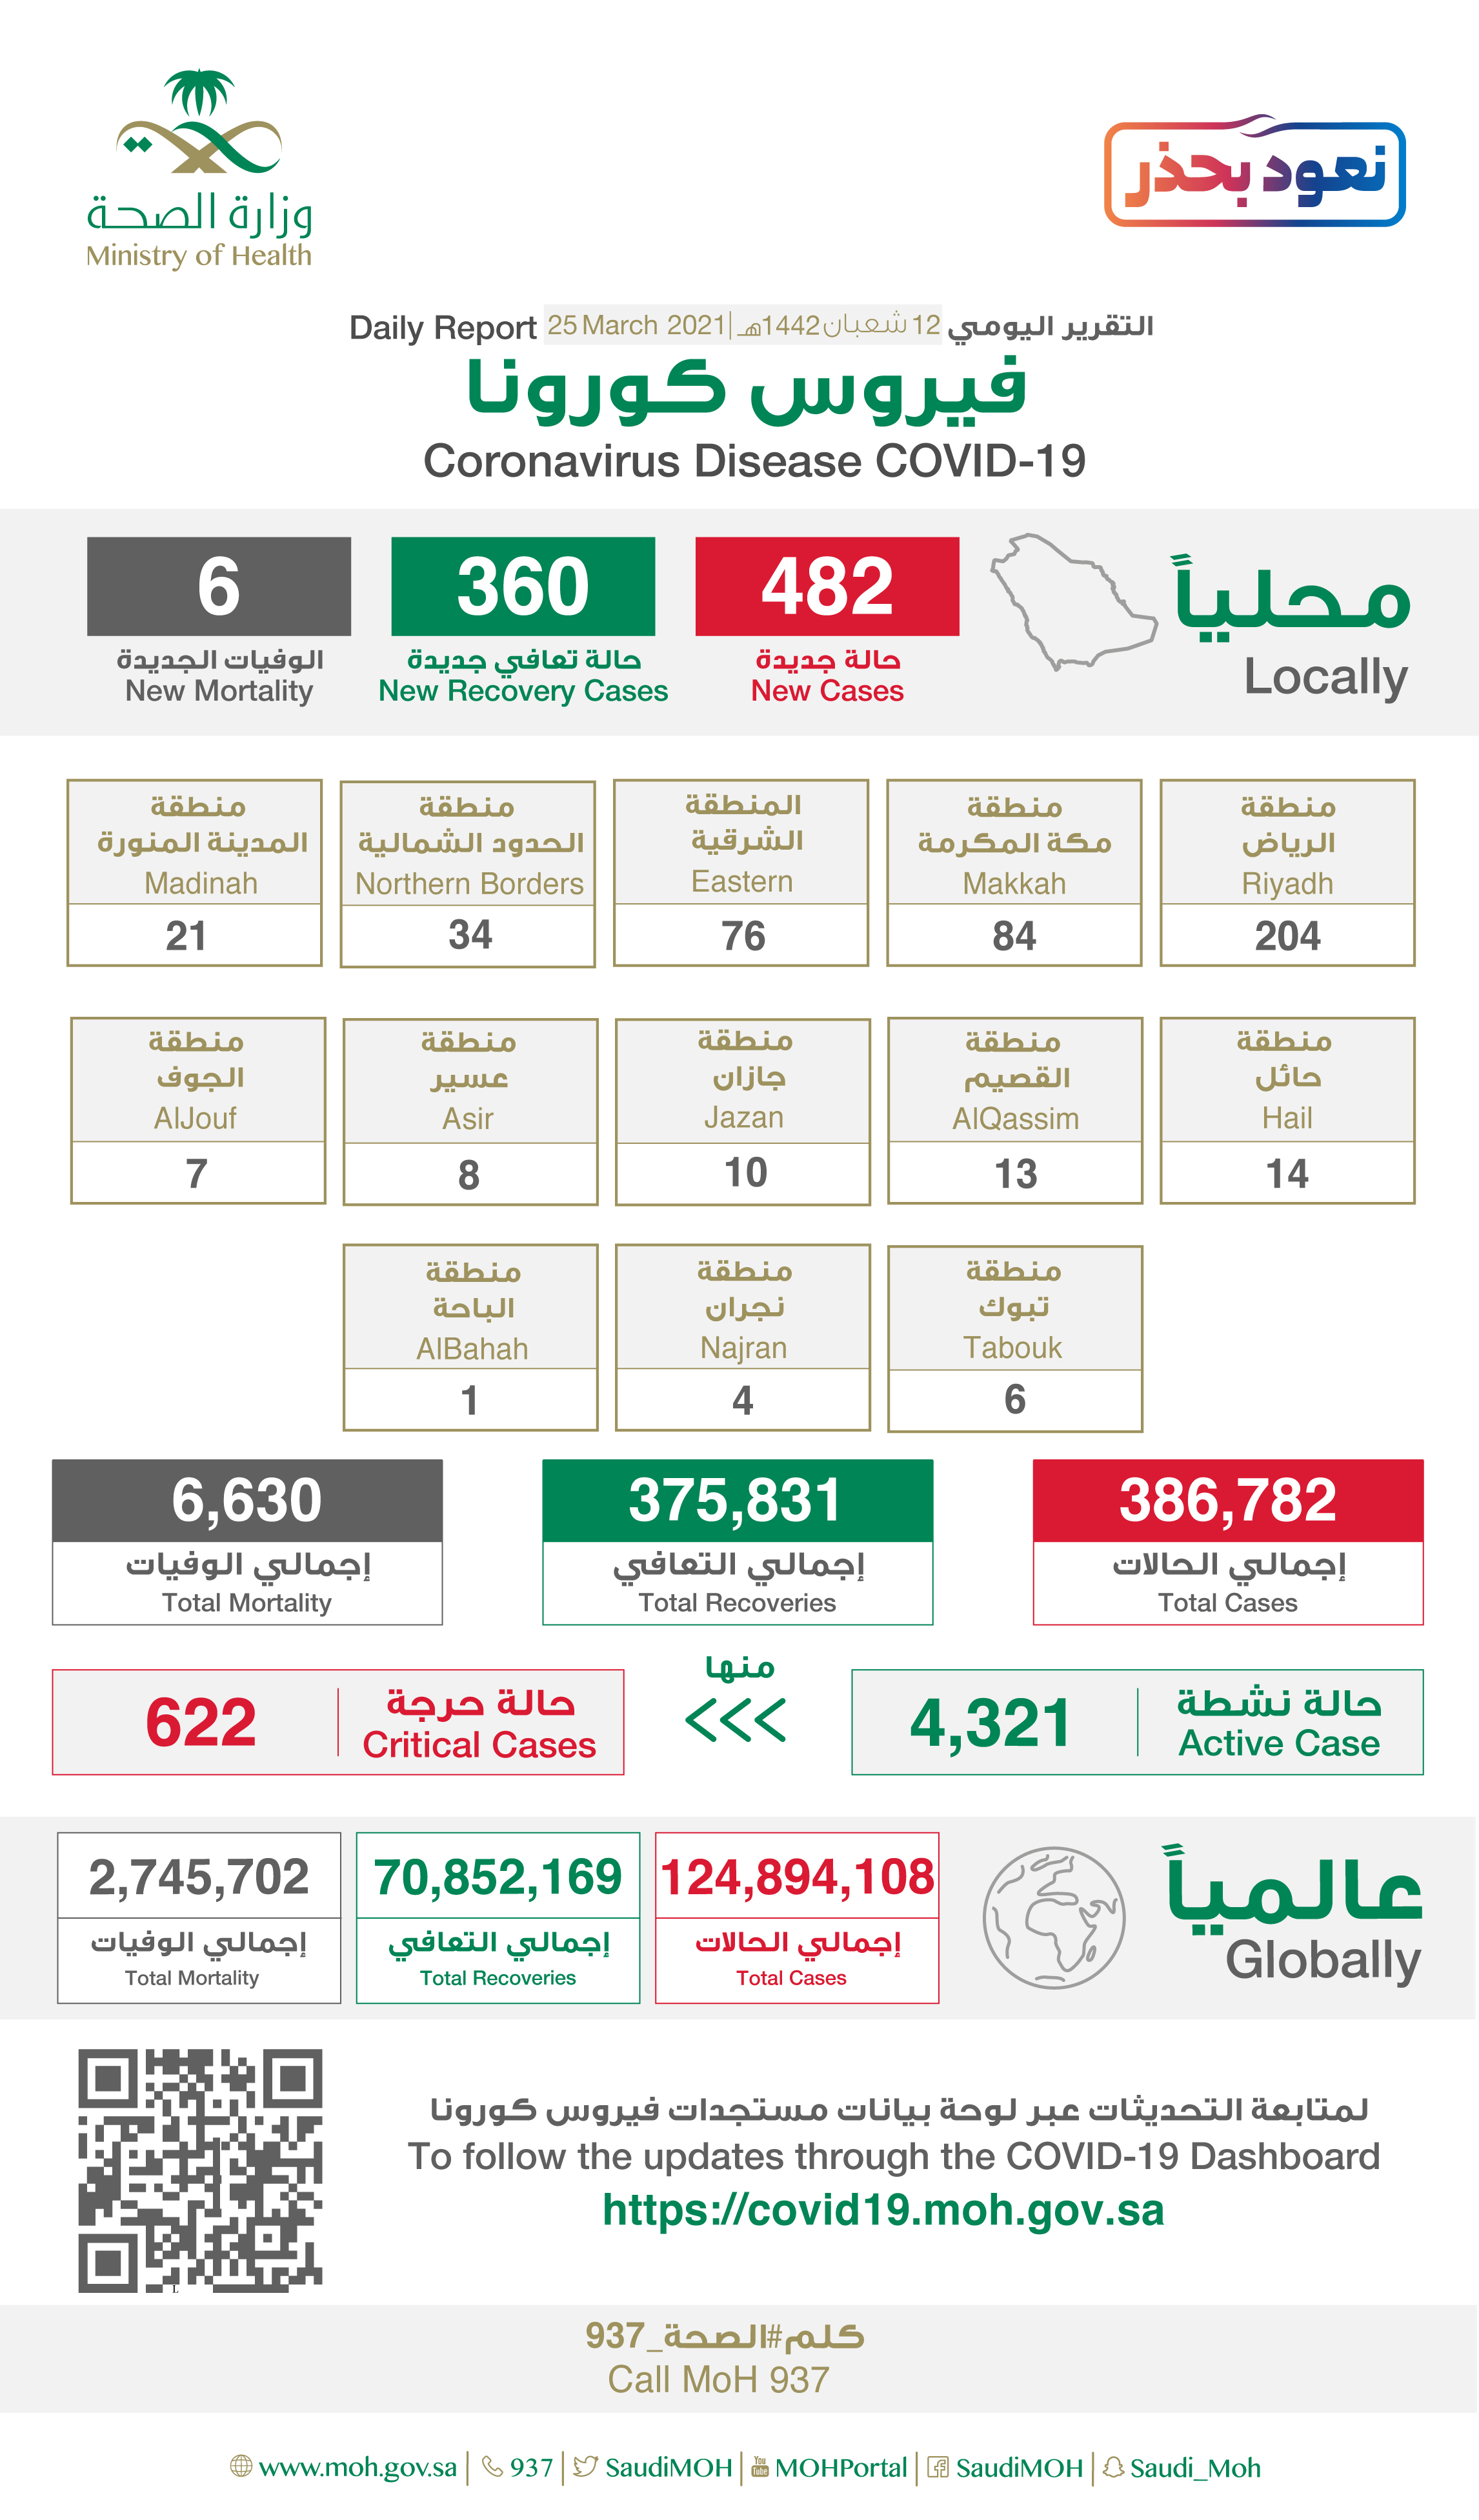 Saudi Arabia Coronavirus : Total Cases :386,728 , New Cases : 482, Cured : 375,831 , Deaths: 6,630, Active Cases : 4,321